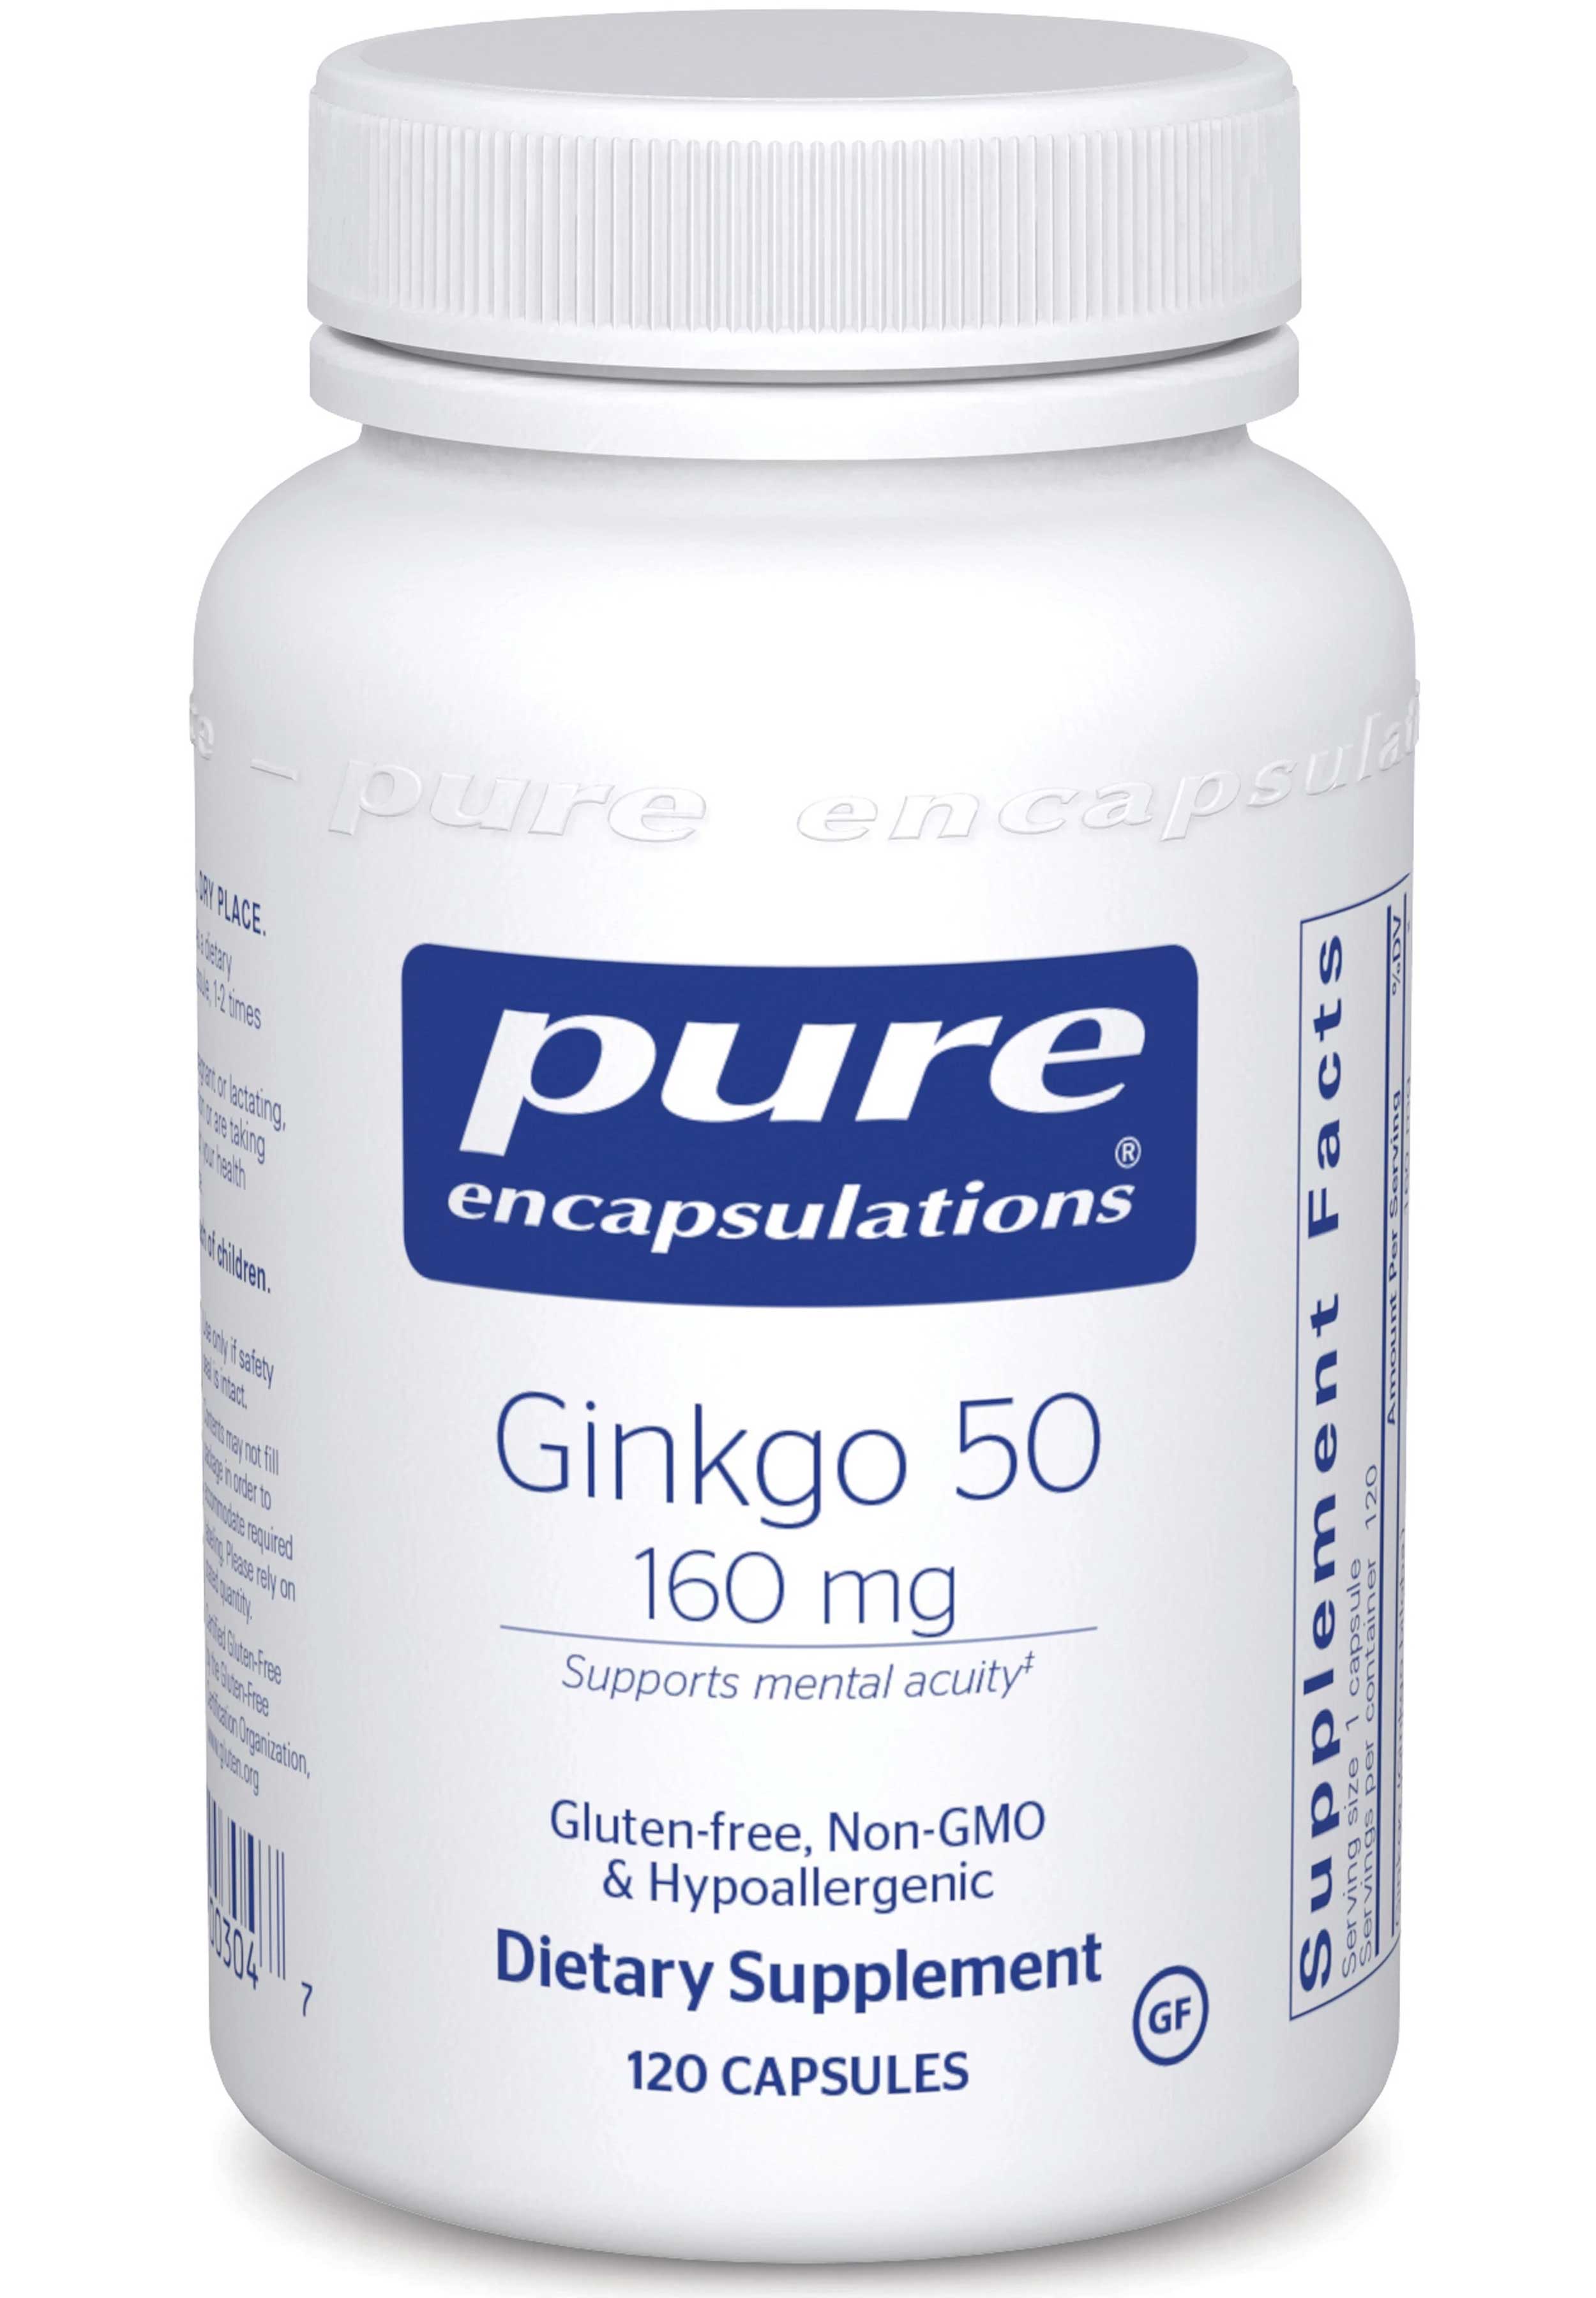 Pure Encapsulations Ginkgo 50 160mg